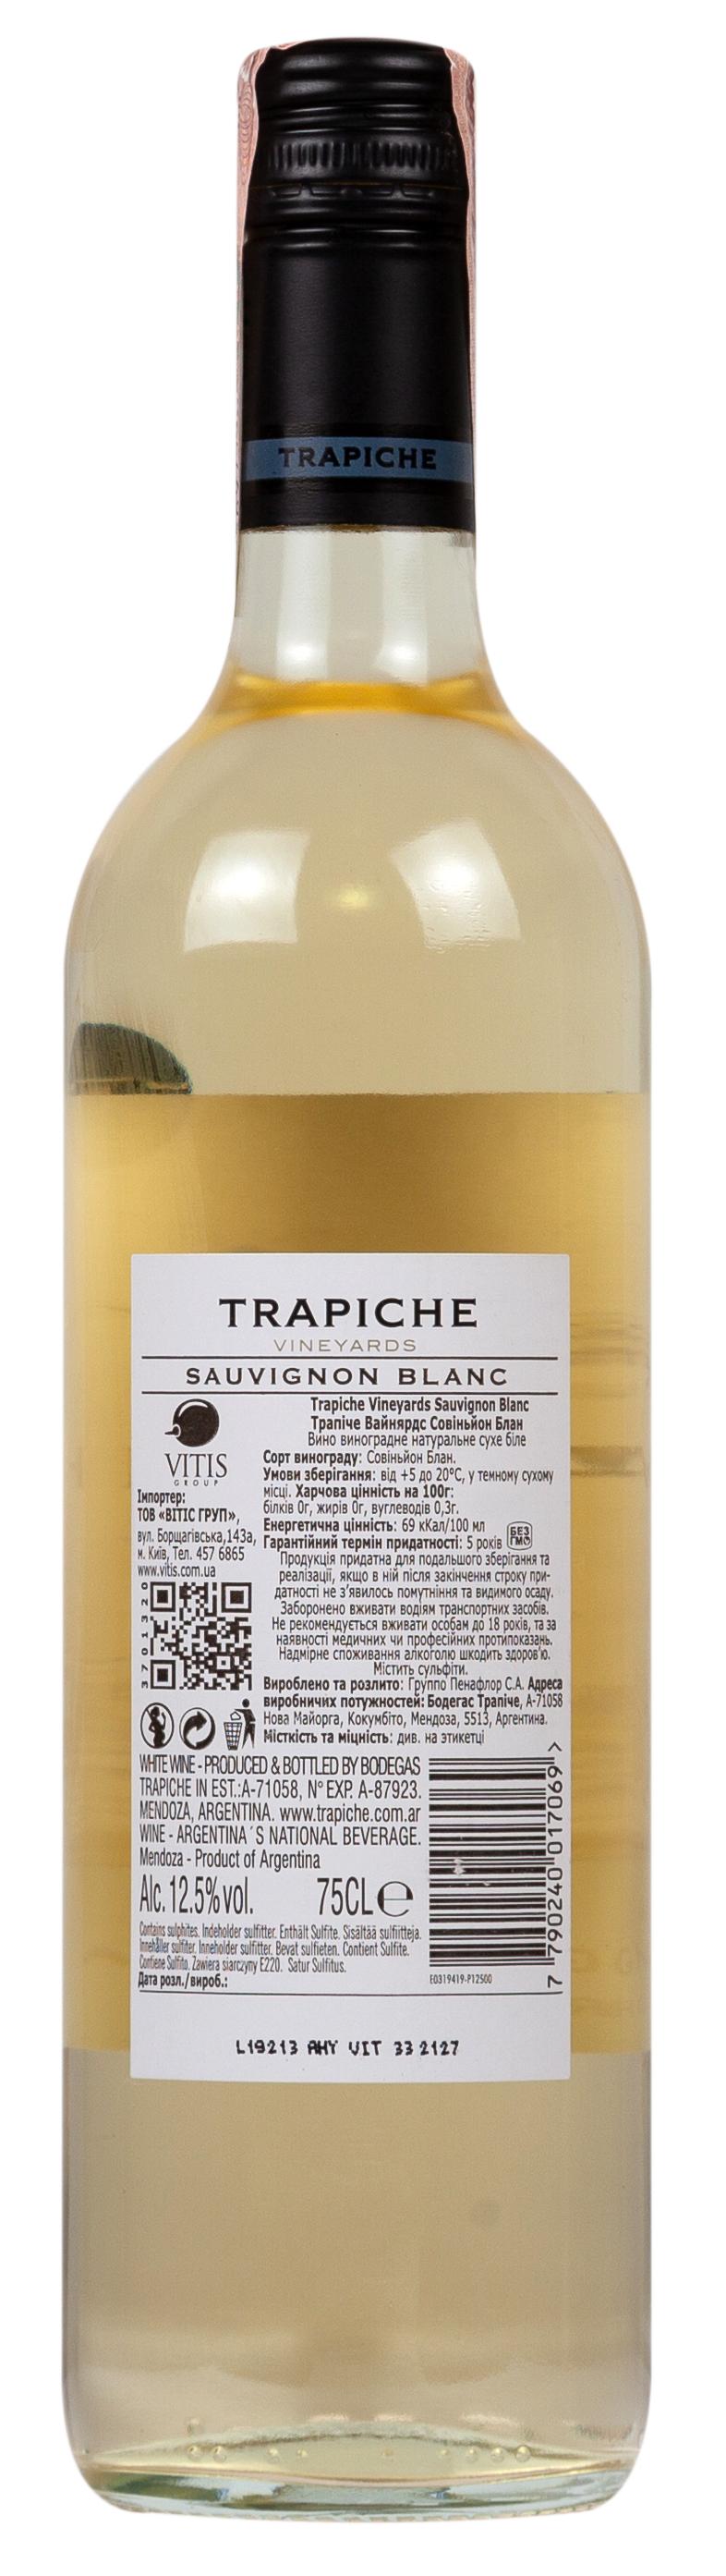 Trapiche Vineyards Sauvignon Blanc 2019 Set 6 bottles - 2